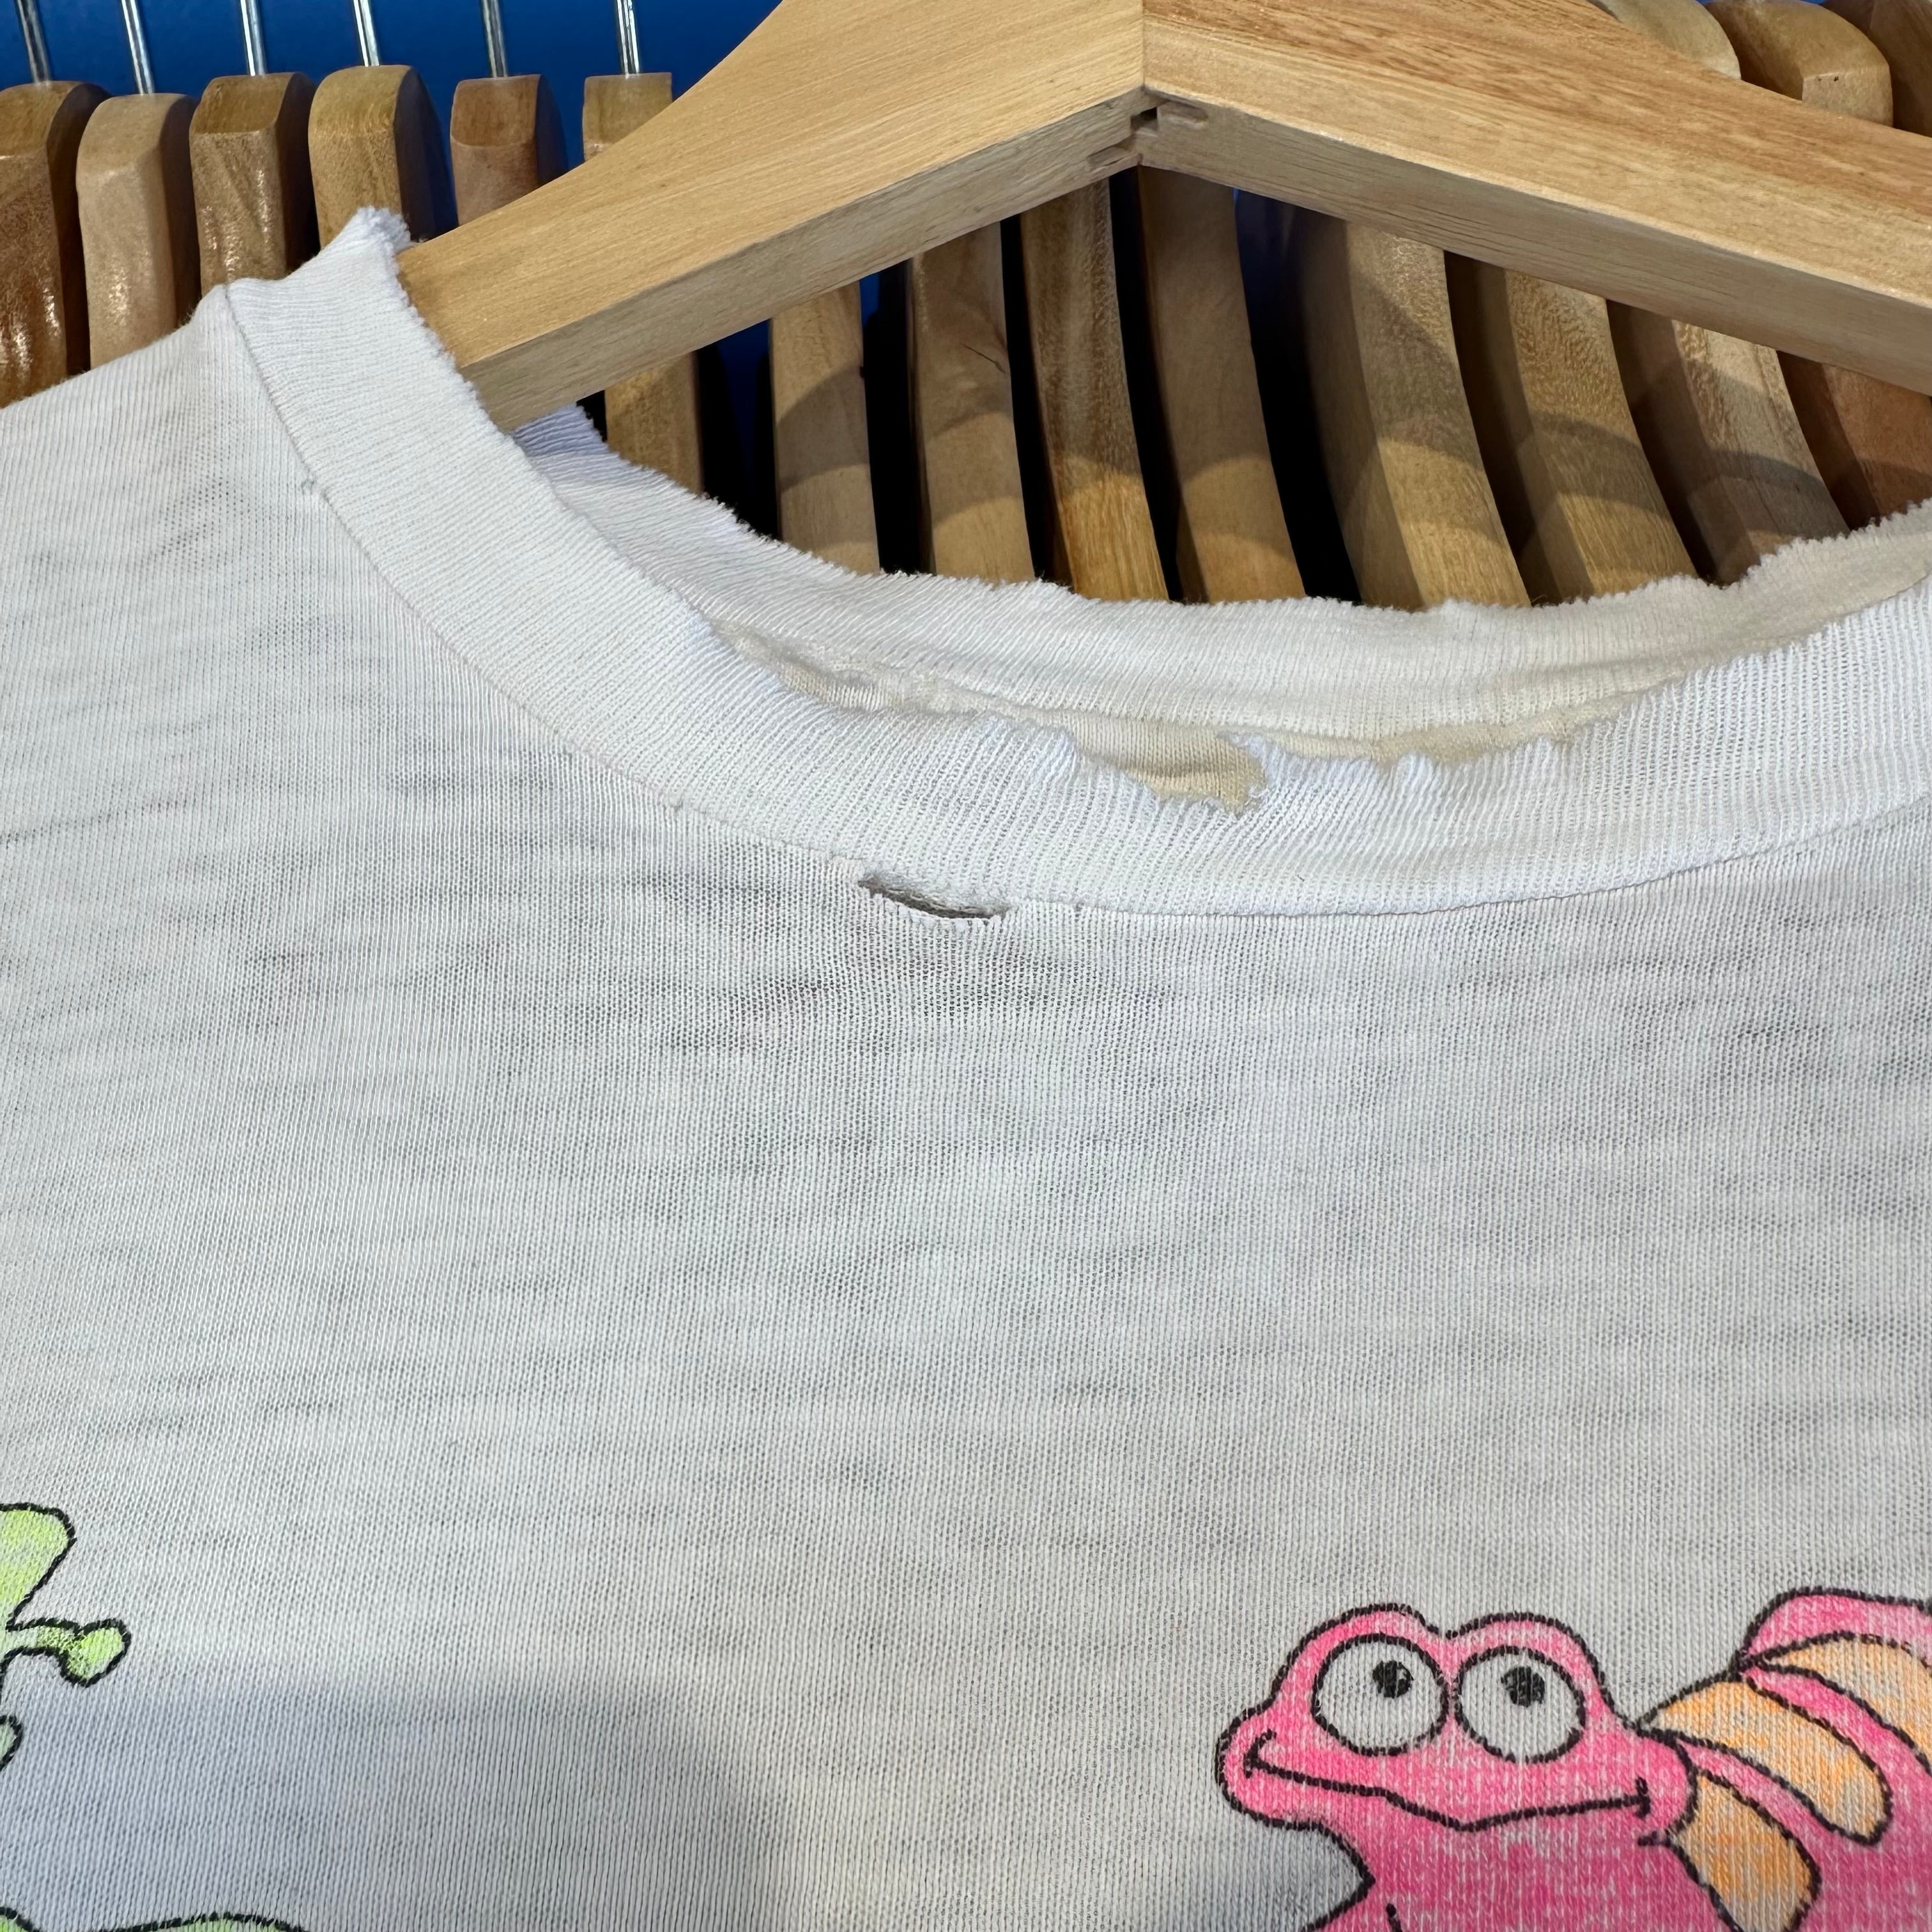 Gecked Out Gecko T-Shirt